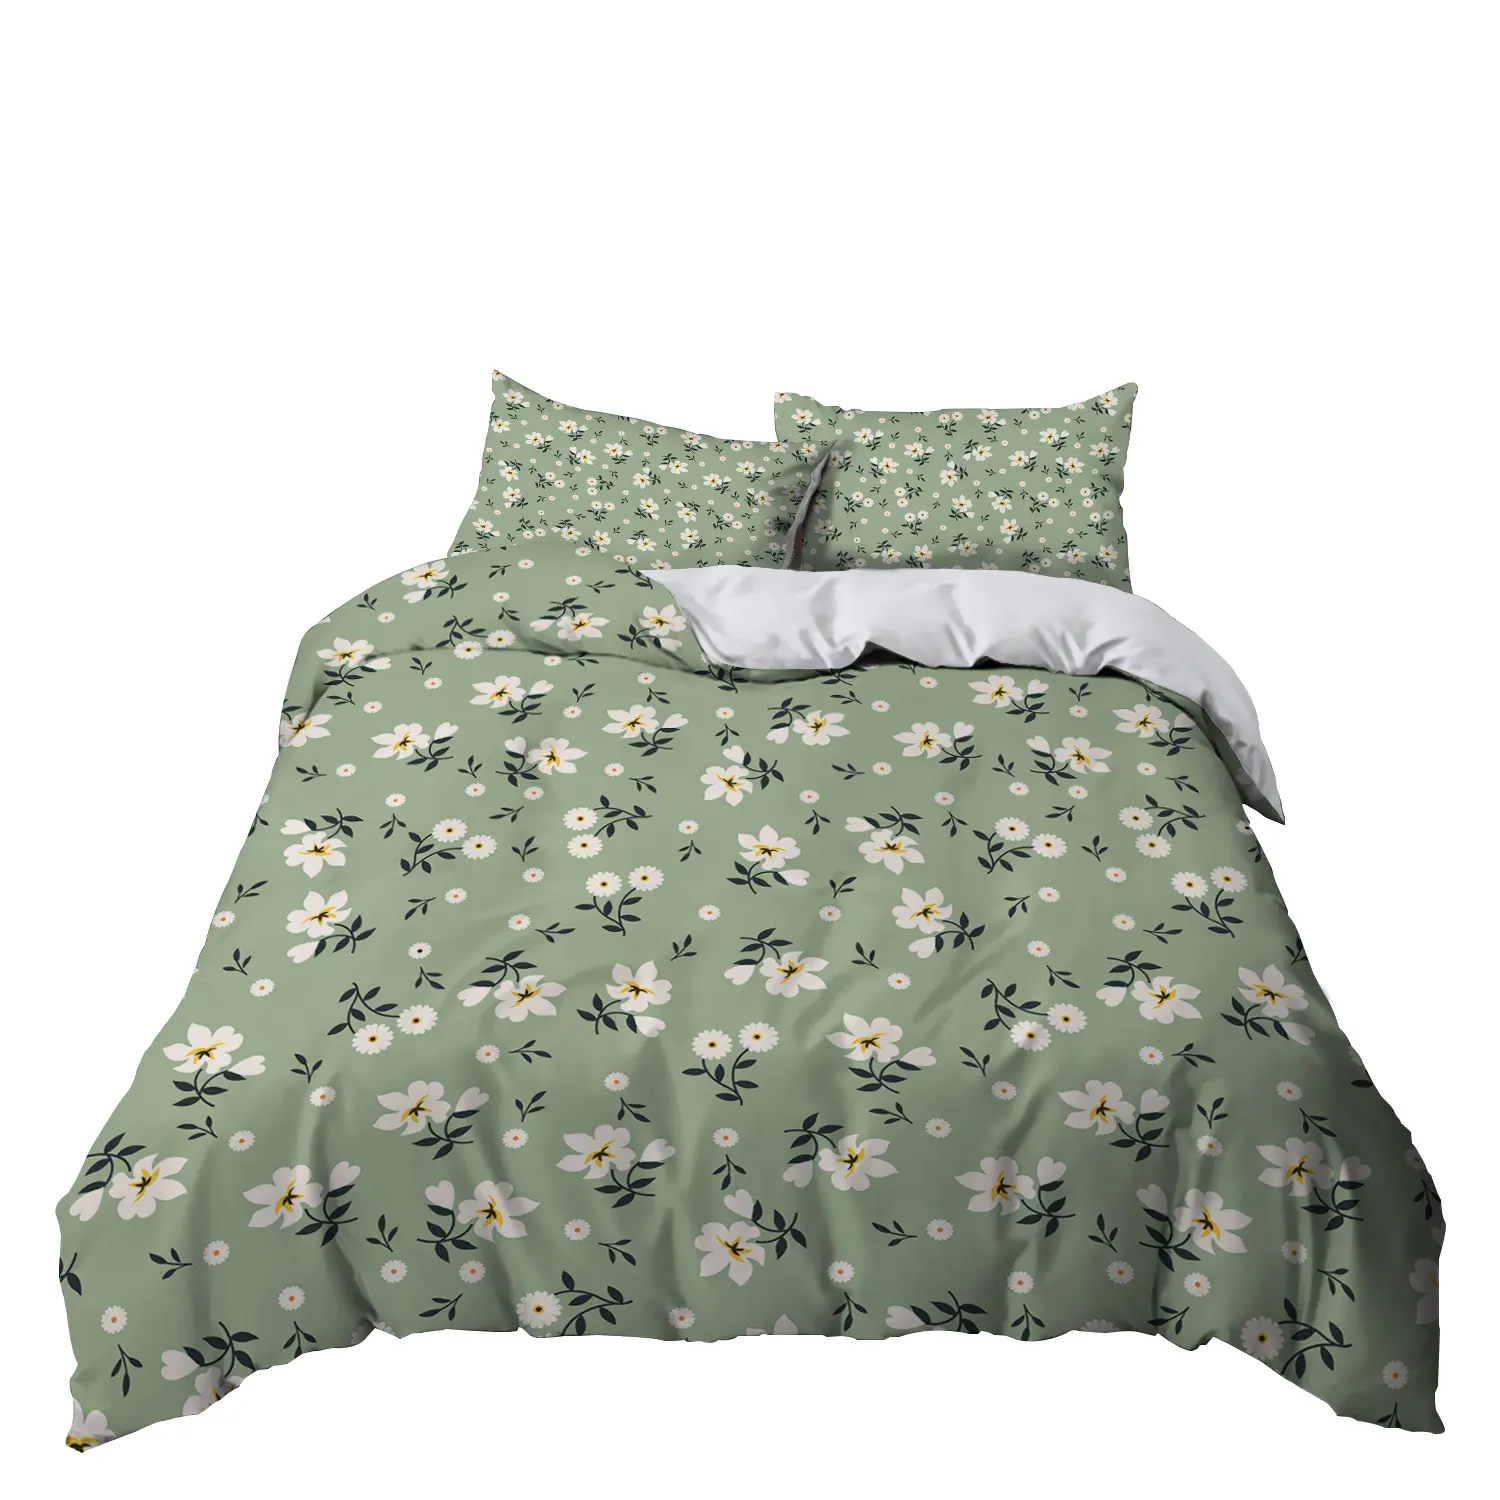 Wholesale High Quality 3d Print Flower Comforter Bedding Sets sheet pillowcase & duvet cover sets